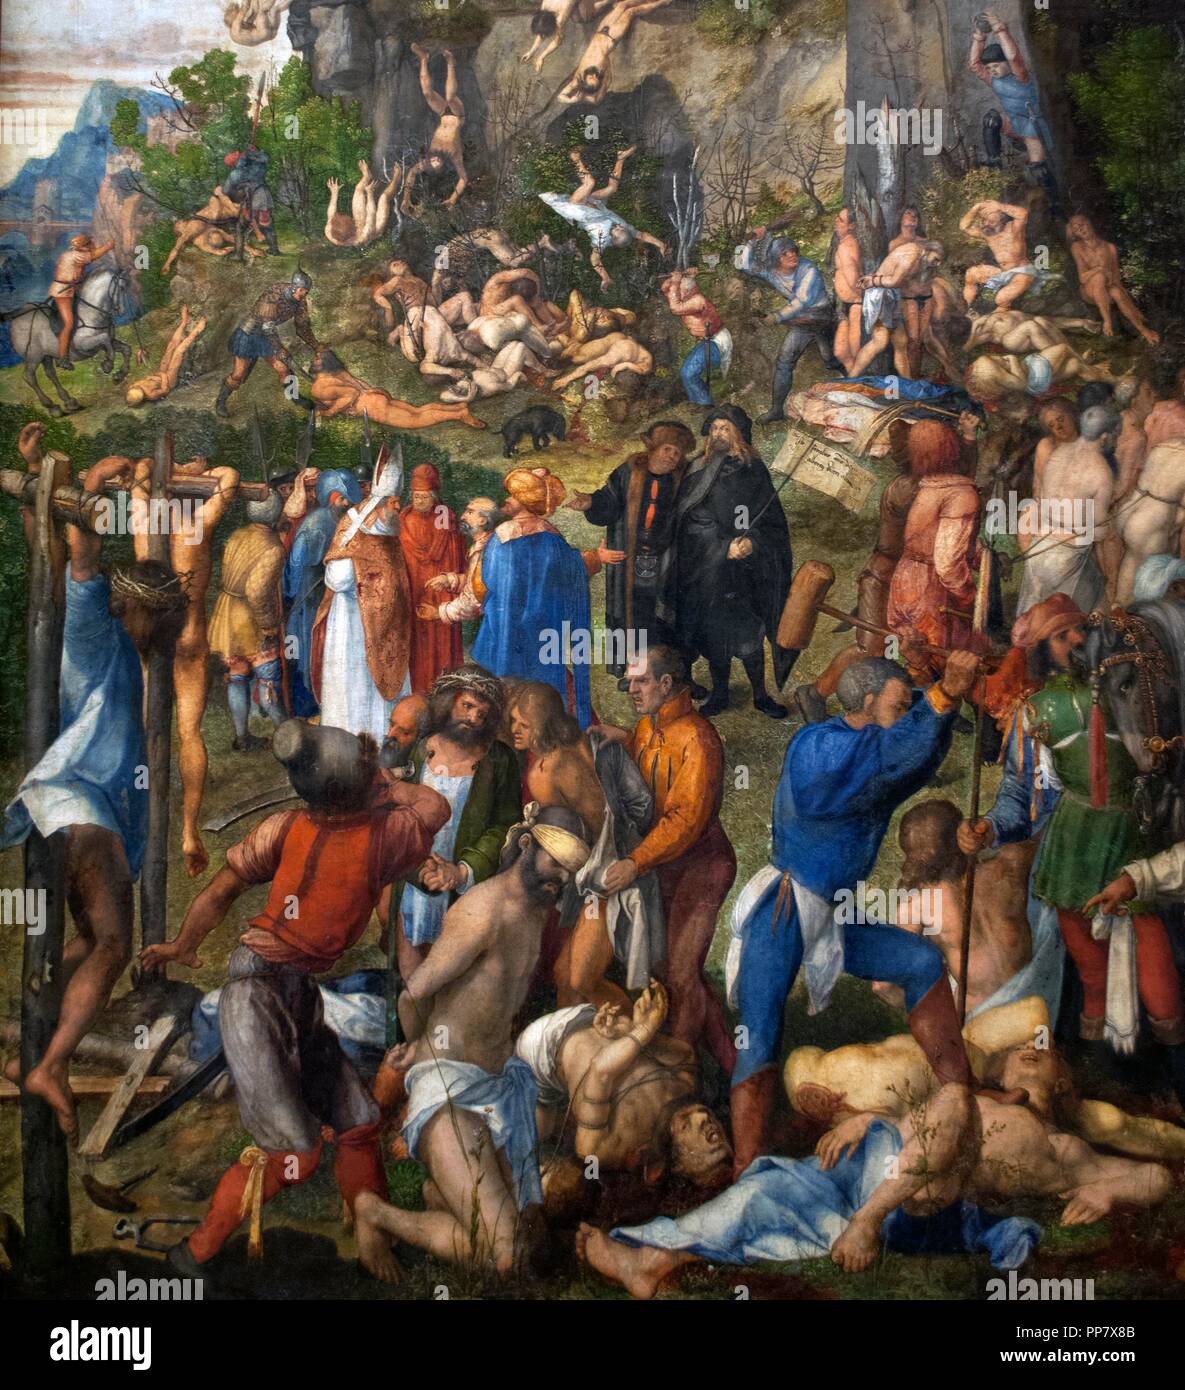 Albrecht Durer (1471-1528). Renaissance German painter. Martyrdom of the  Ten Thousand, 1508. Art History Museum. Vienna. Austria Stock Photo - Alamy